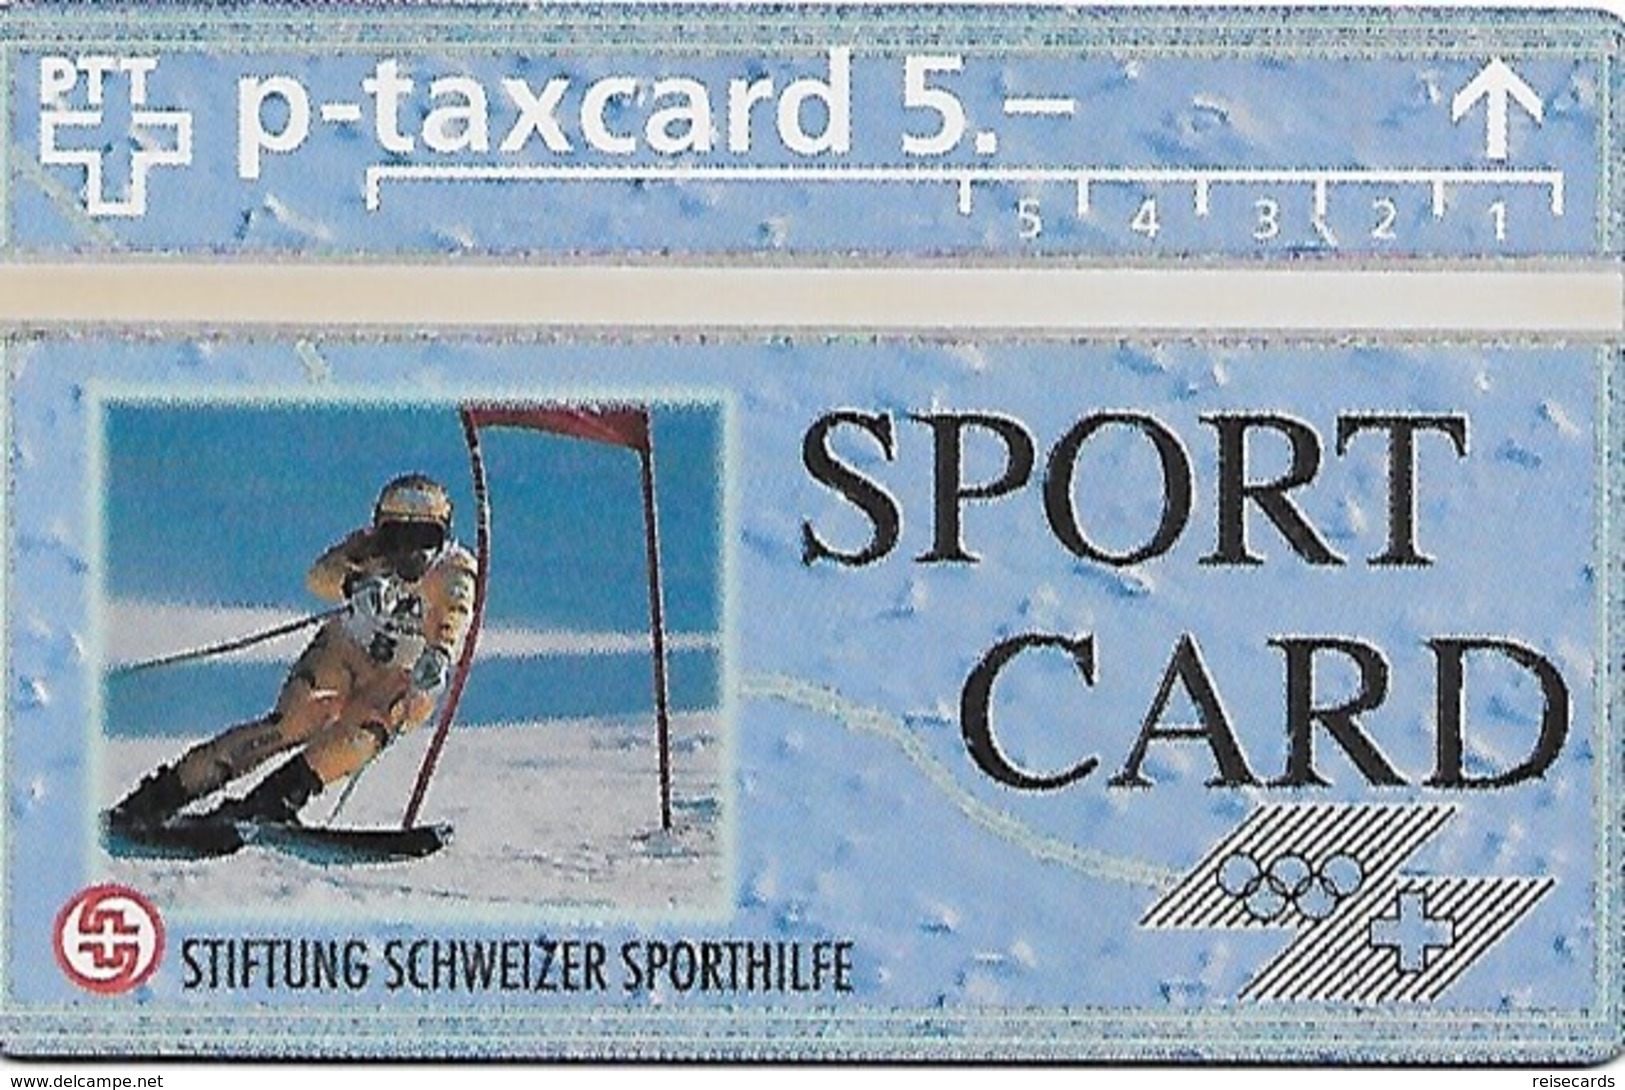 PTT-p: KP-93/56F 403L Stiftung Schweizer Sporthilfe - Sportcard Ski Alpin - Switzerland